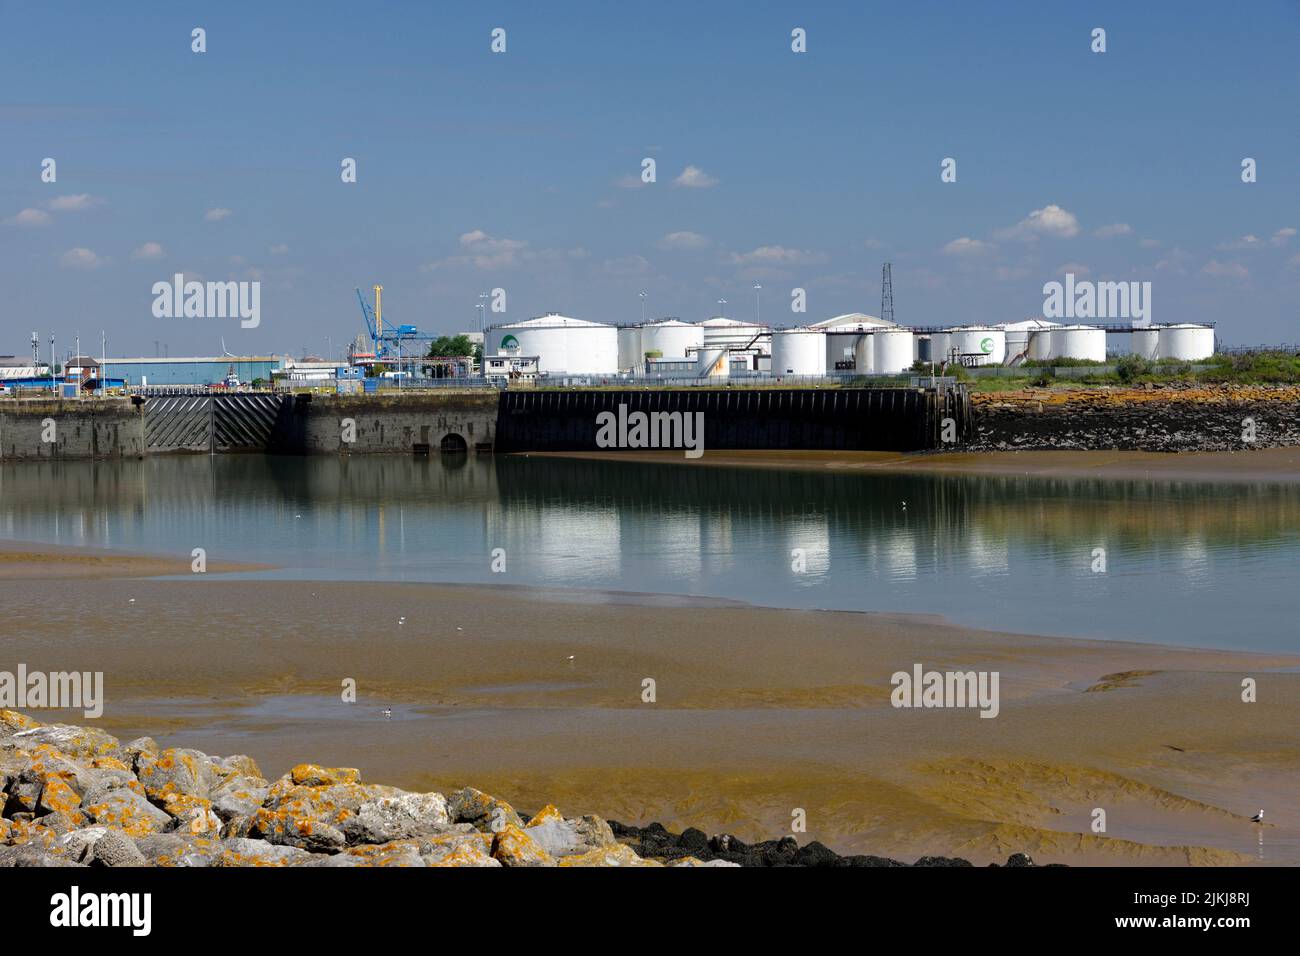 Oil storage tanks, Cardiff Bay Barrage, South Wales, UK. Stock Photo